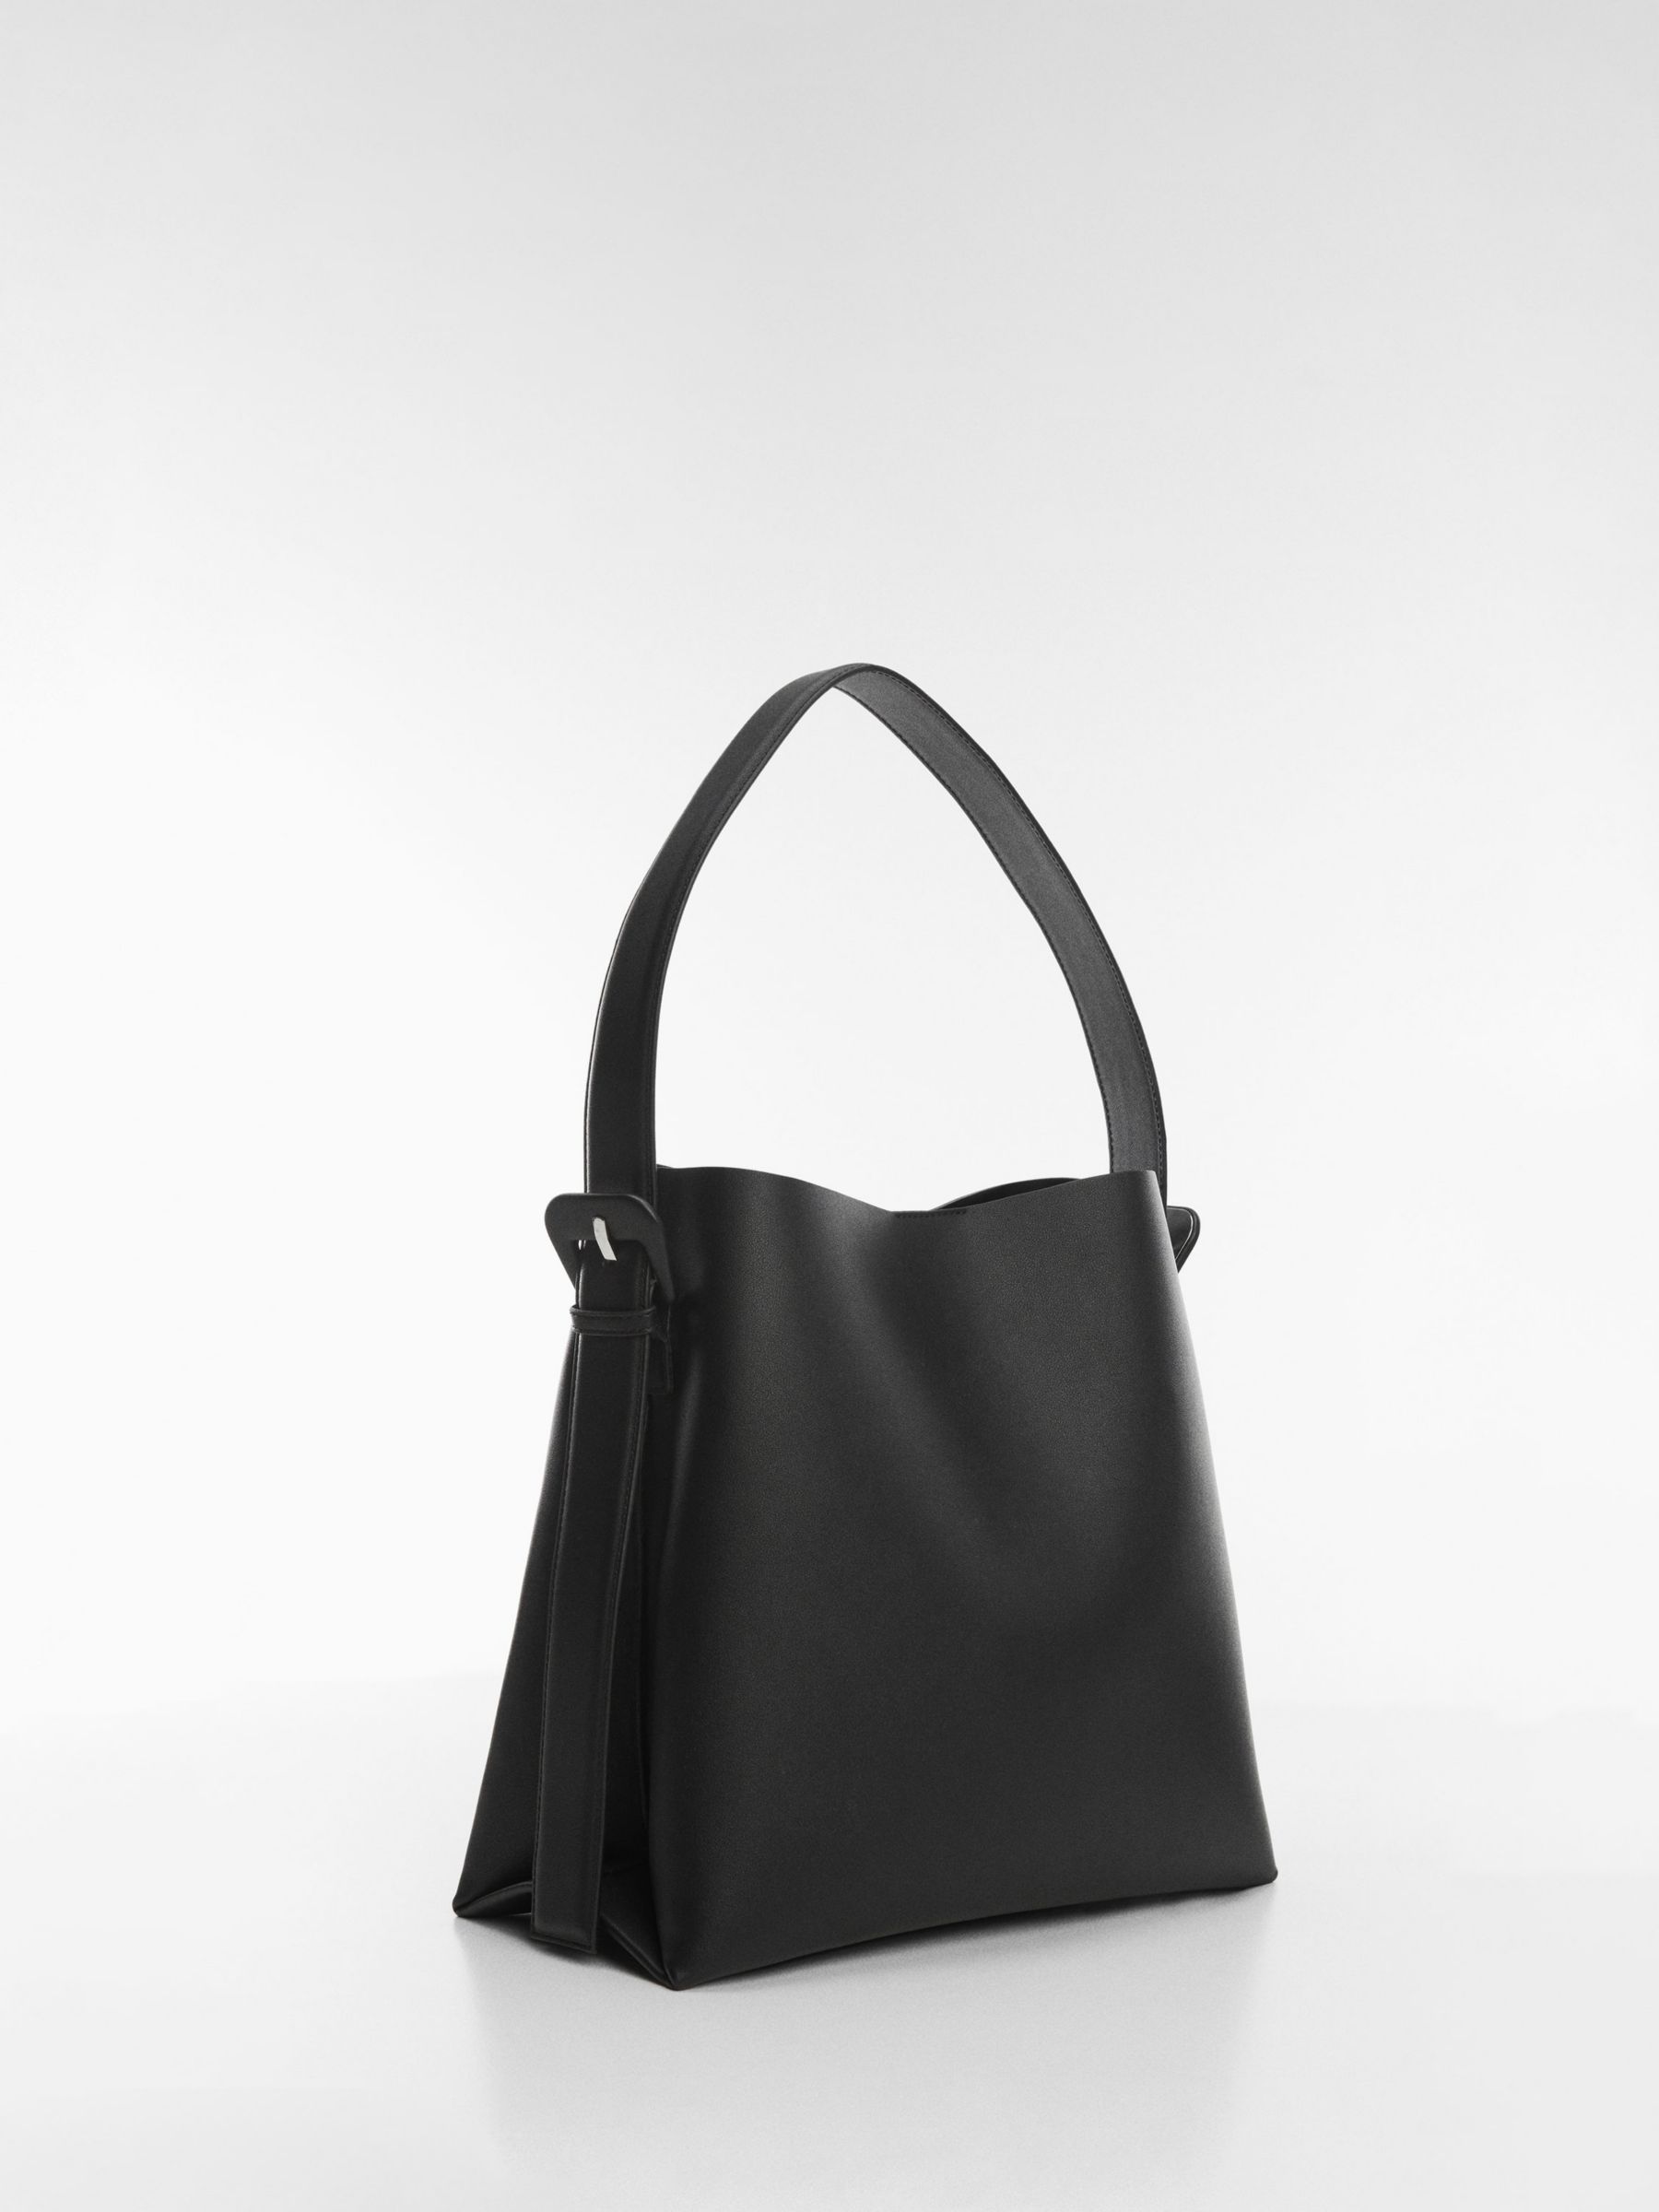 Mango Lucia Large Shoulder Bag, Black, One Size